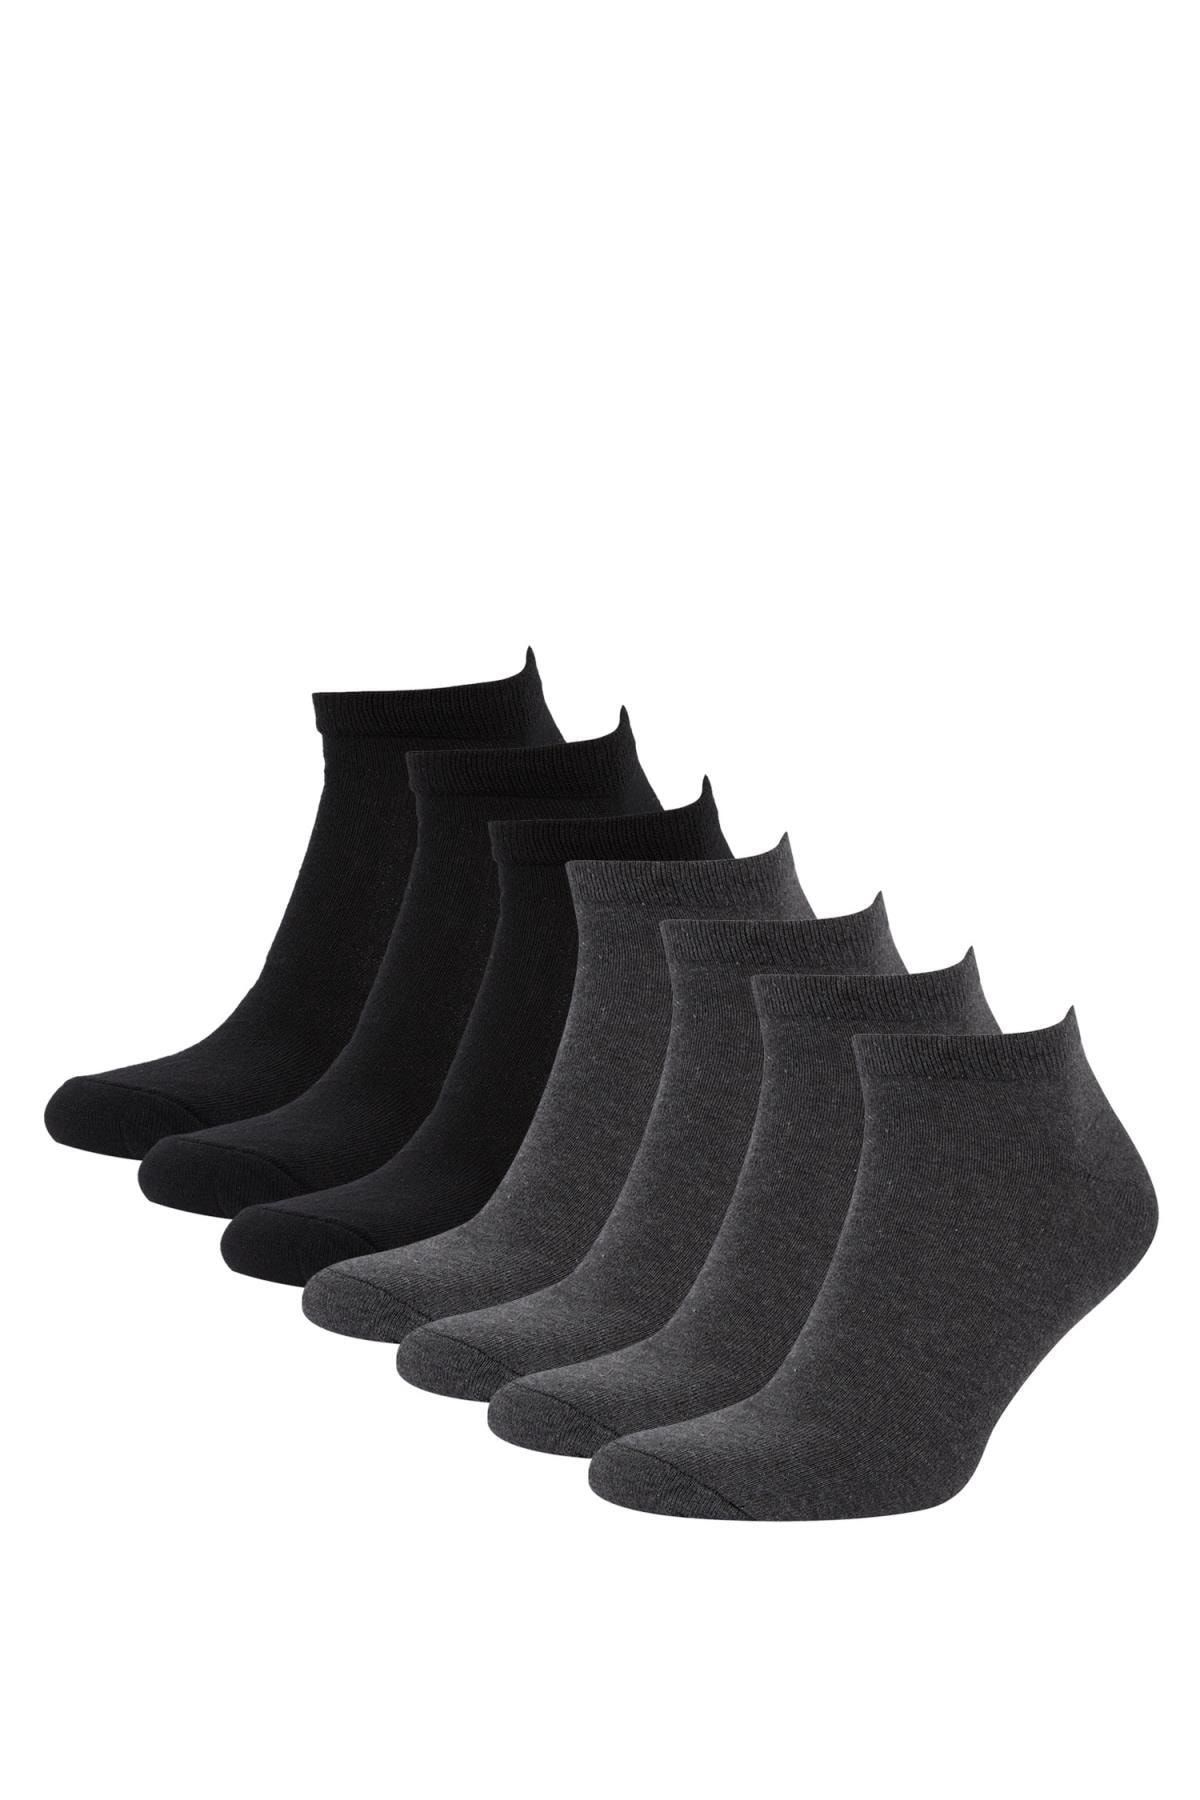 جوراب کوتاه نخی مشکی و خاکستری مردانه بسته ۷ عددی دفاکتو DeFacto (برند ترکیه)